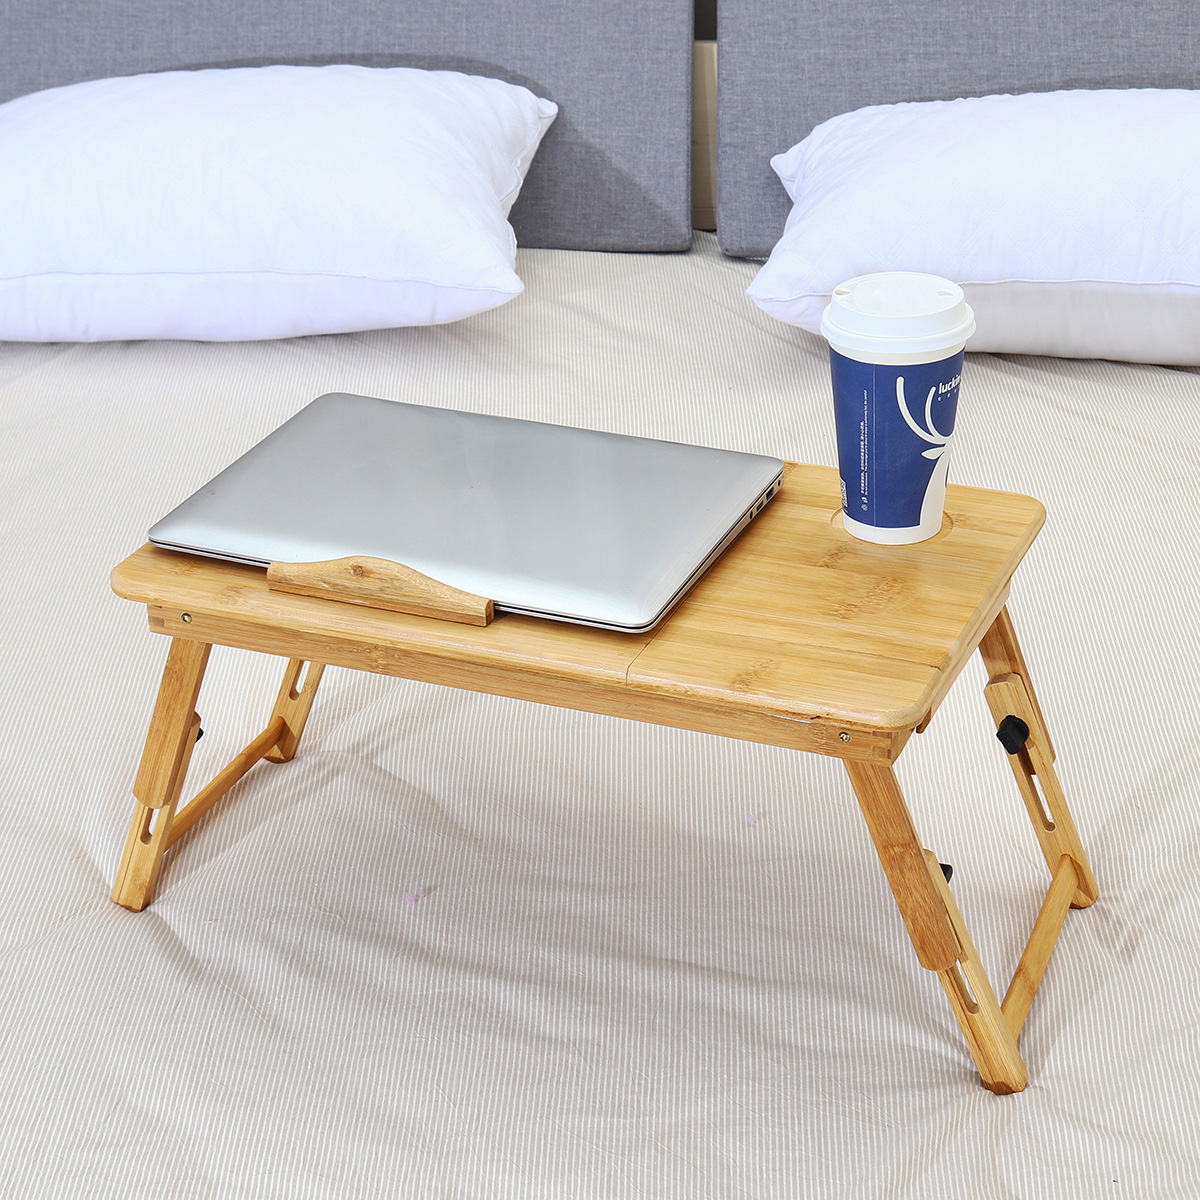 Adjustable-Laptop-Desk-Large-Bed-Tray-Tilting-Top-Foldable-Table-Multi-tasking-Stand-Breakfast-Servi-1547679-6